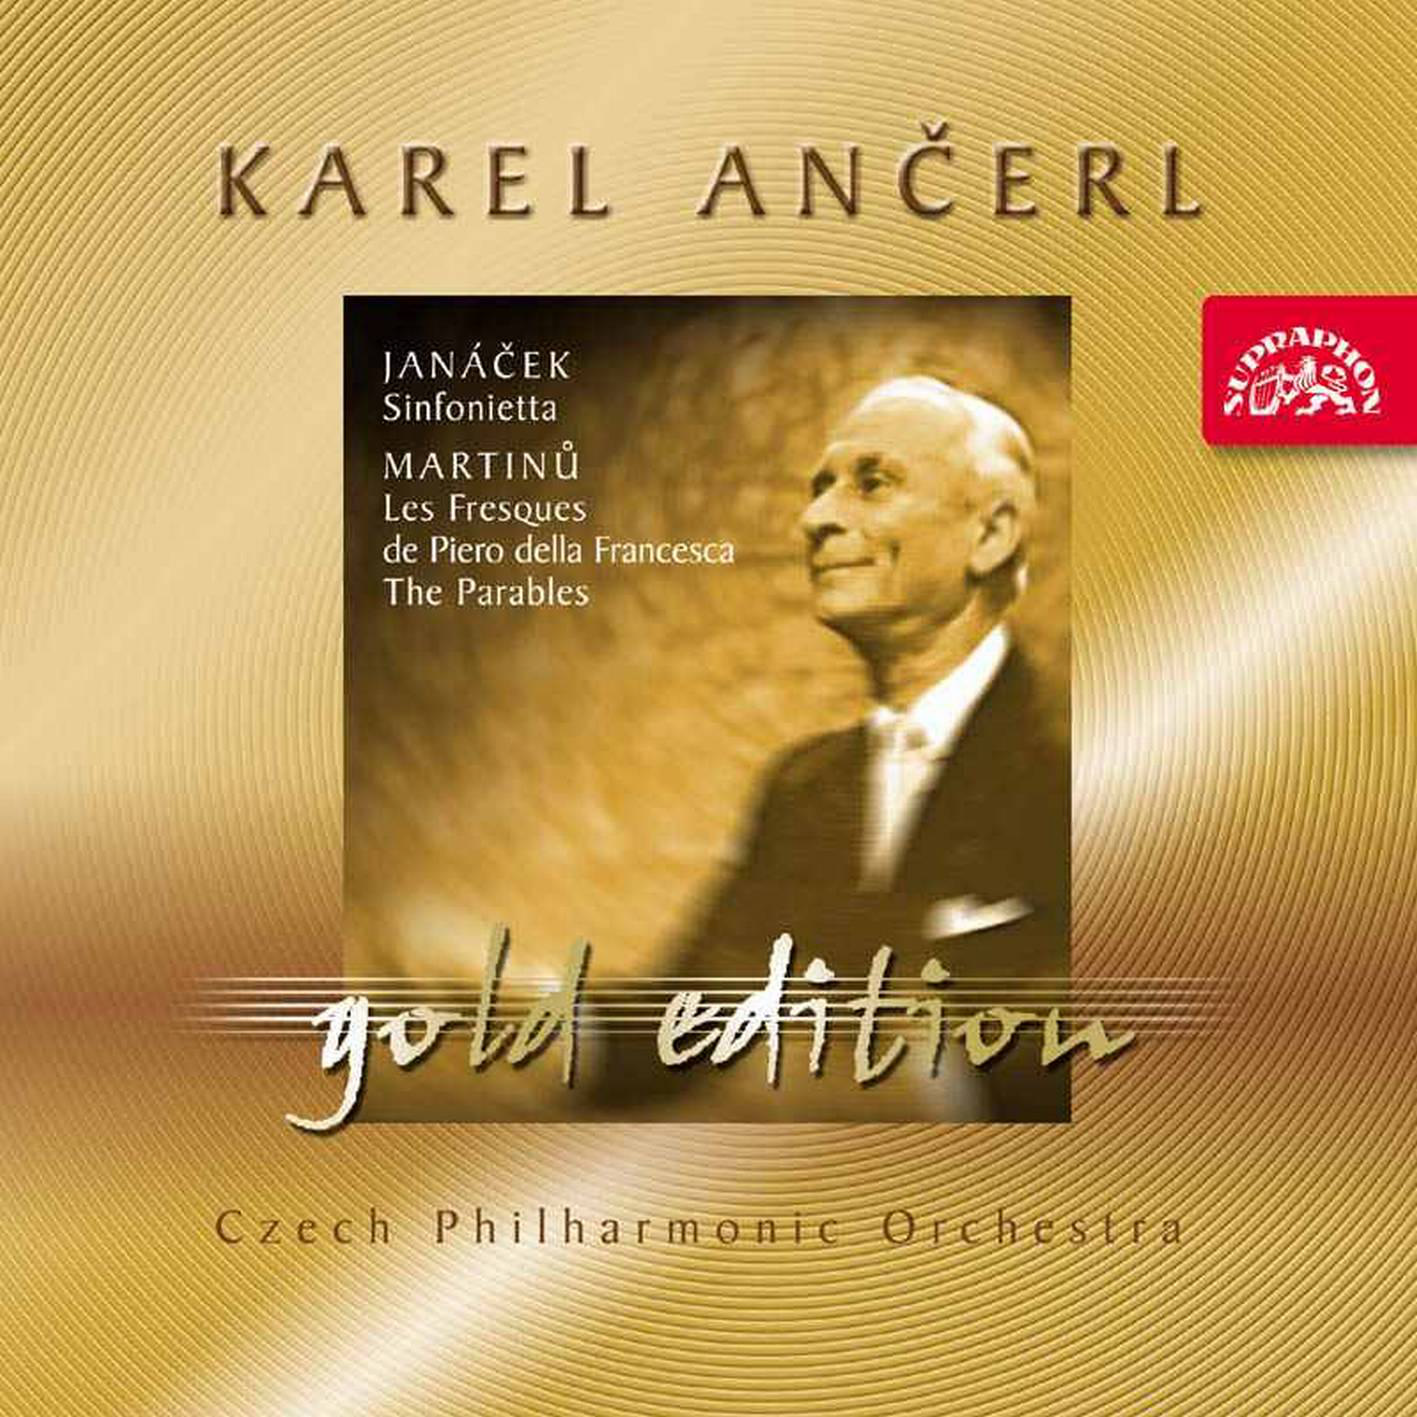 CD Shop - JANACEK, L. KAREL ANCERL VOL.24-GOLD